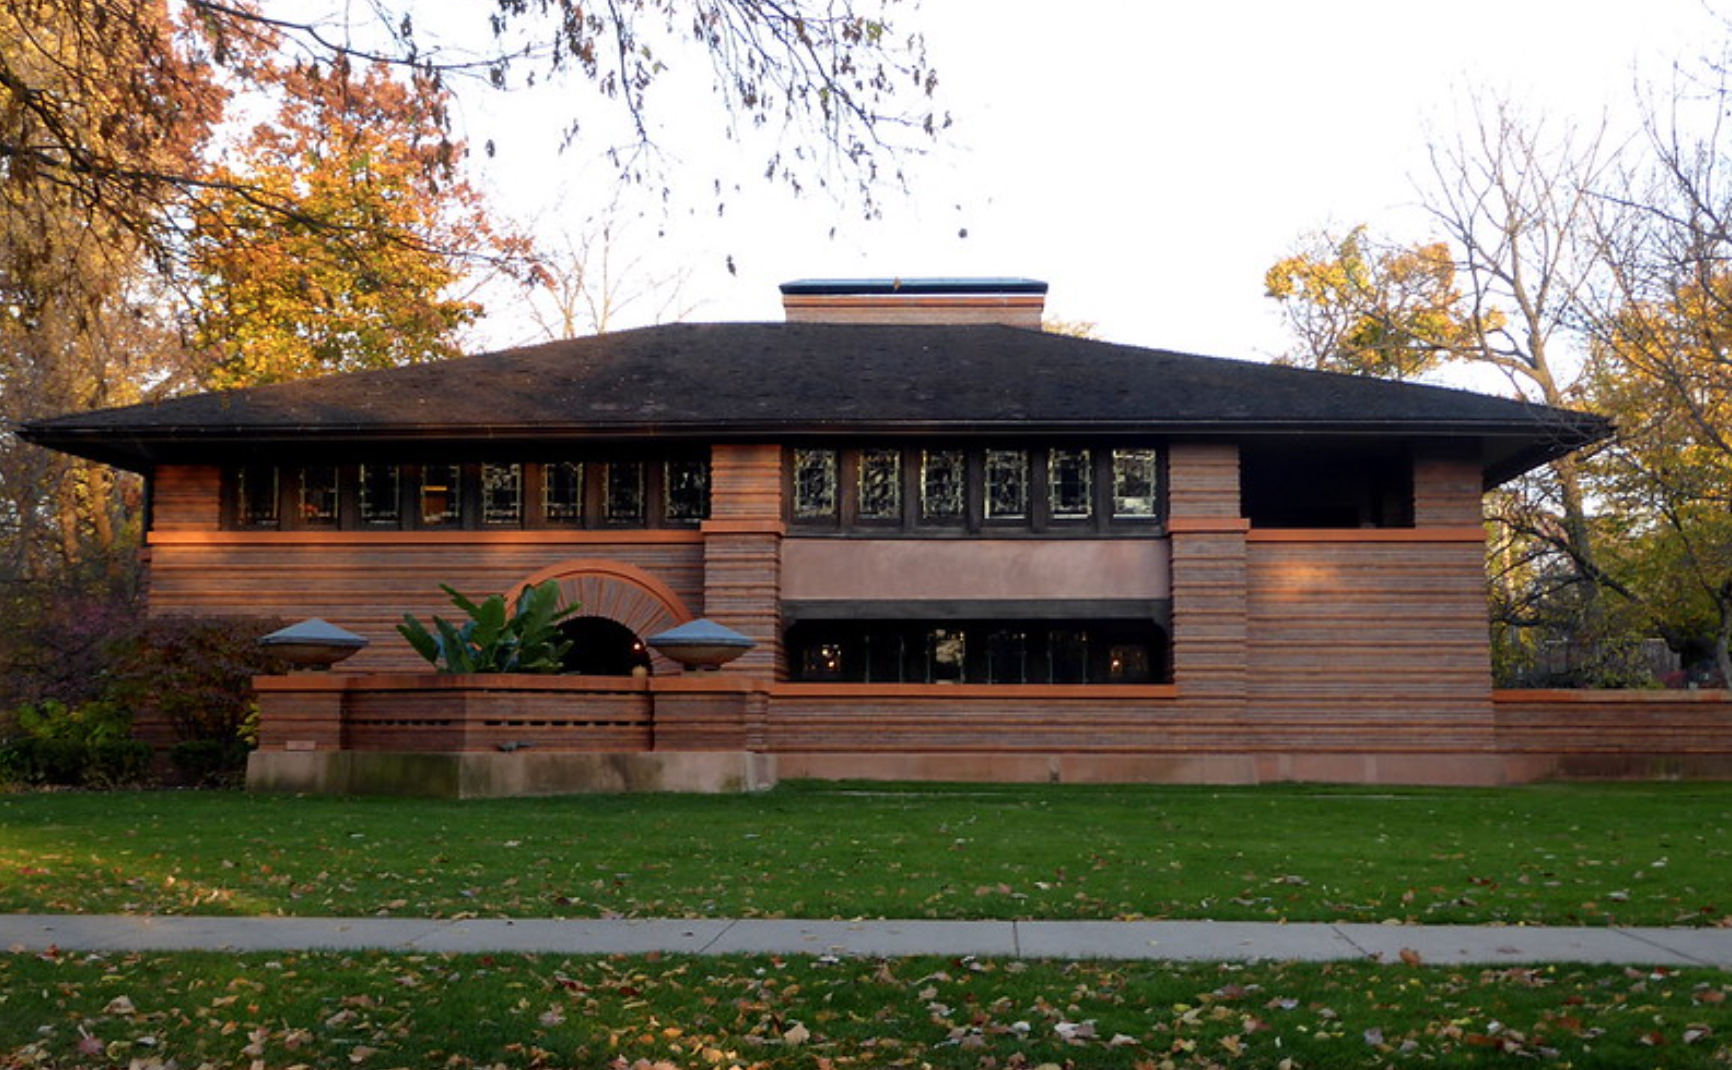 The Arthur B. Heurtley House: A Testament to Frank Lloyd Wright’s Design Evolution